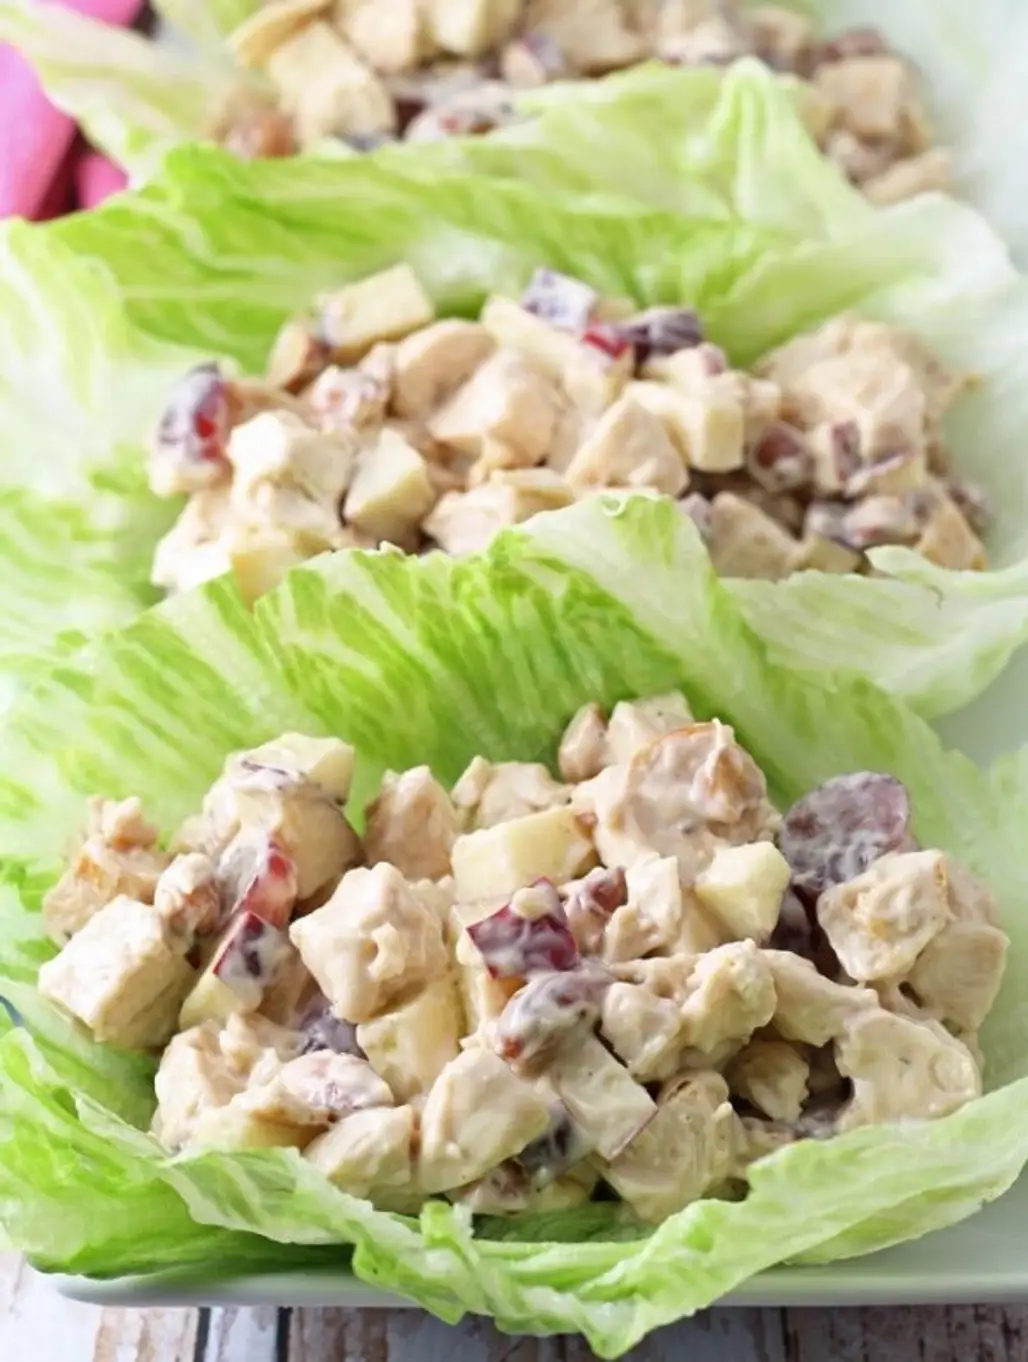 Grilled Chicken Salad Lettuce Wraps